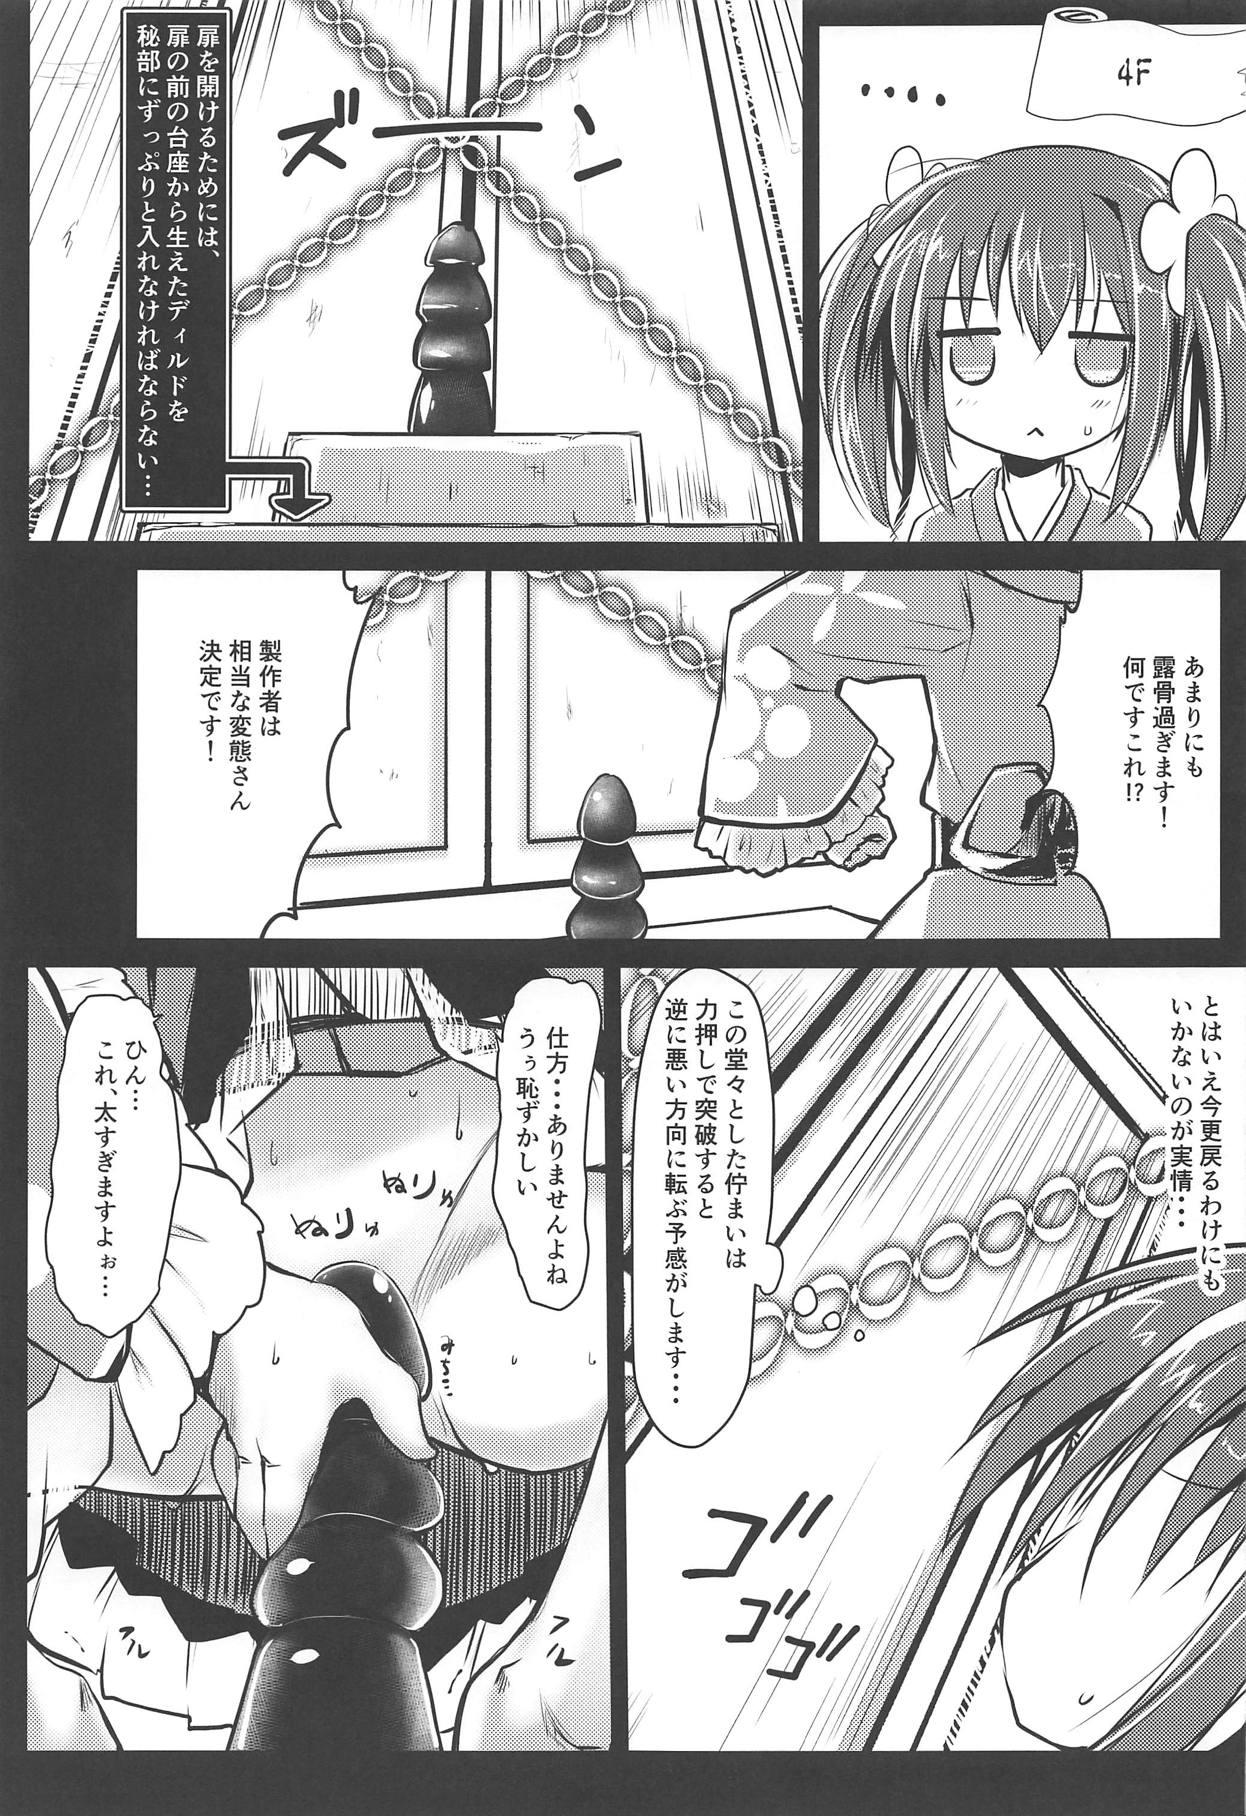 Mas Nishikigi VS Ero Trap D - Flower knight girl Vip - Page 12